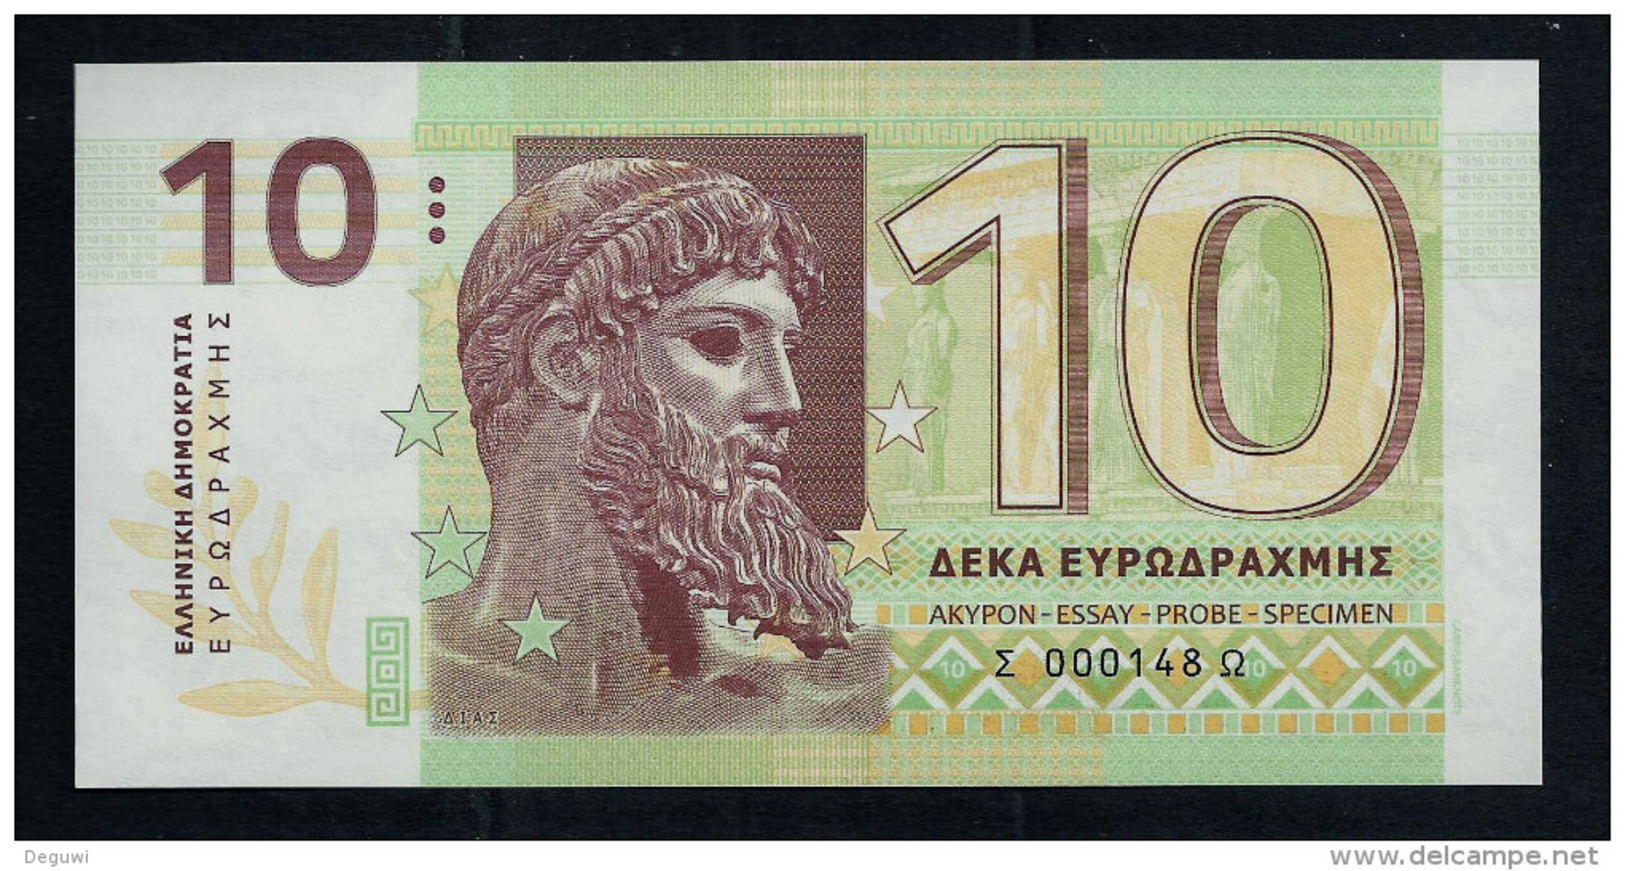 "10 EURO-DRACHME Greece", GABRIS, RRRR, UNC, Ca. 140 X 69 Mm, Essay, Trial, UV, Wm, Serial No., Holo, Private Issue - Griechenland